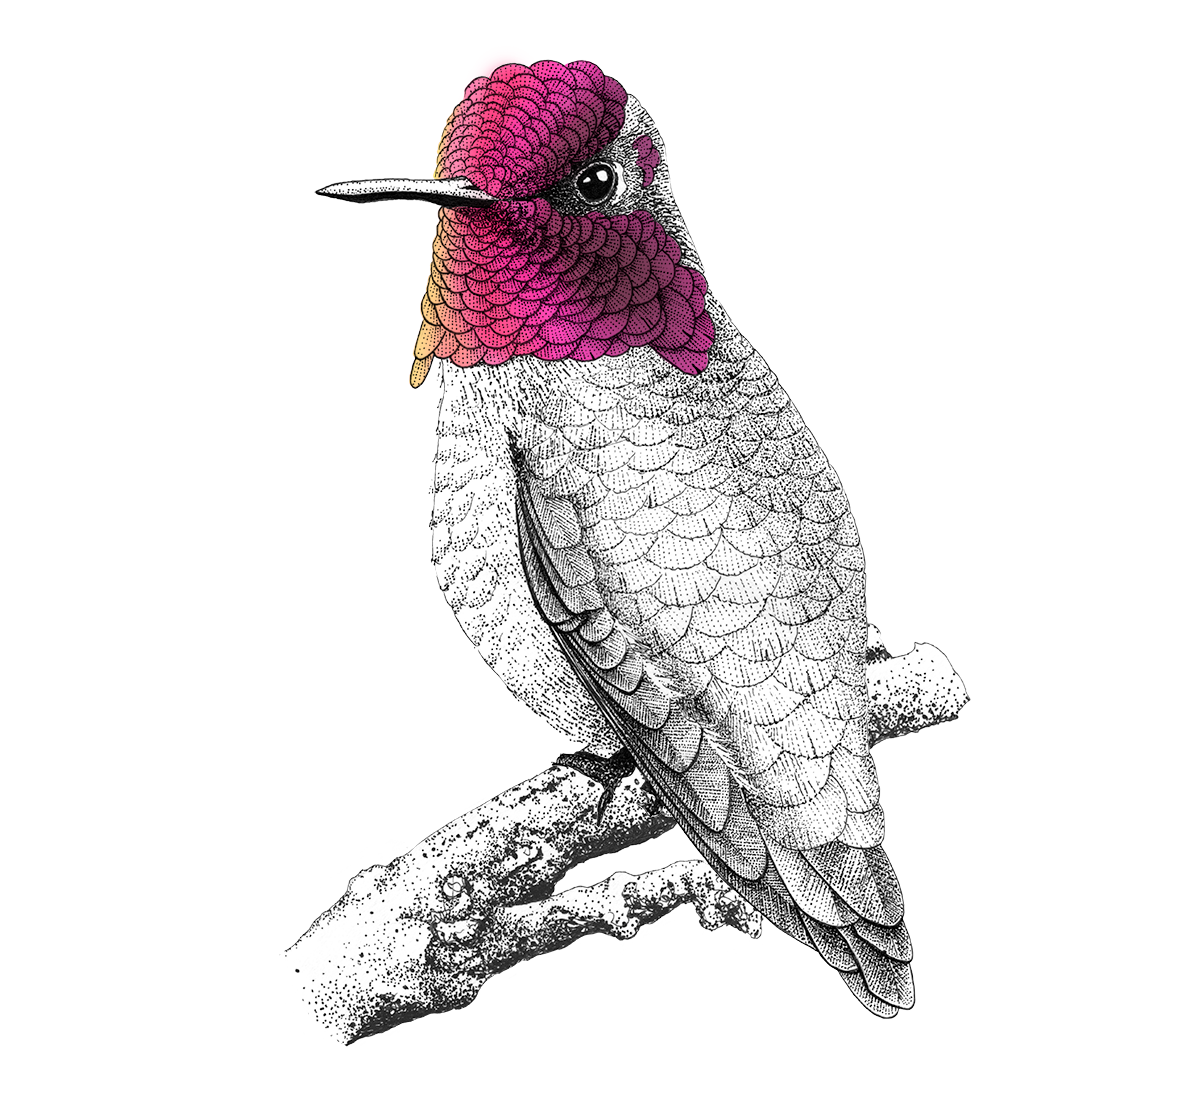 Anna's hummingbird illustration